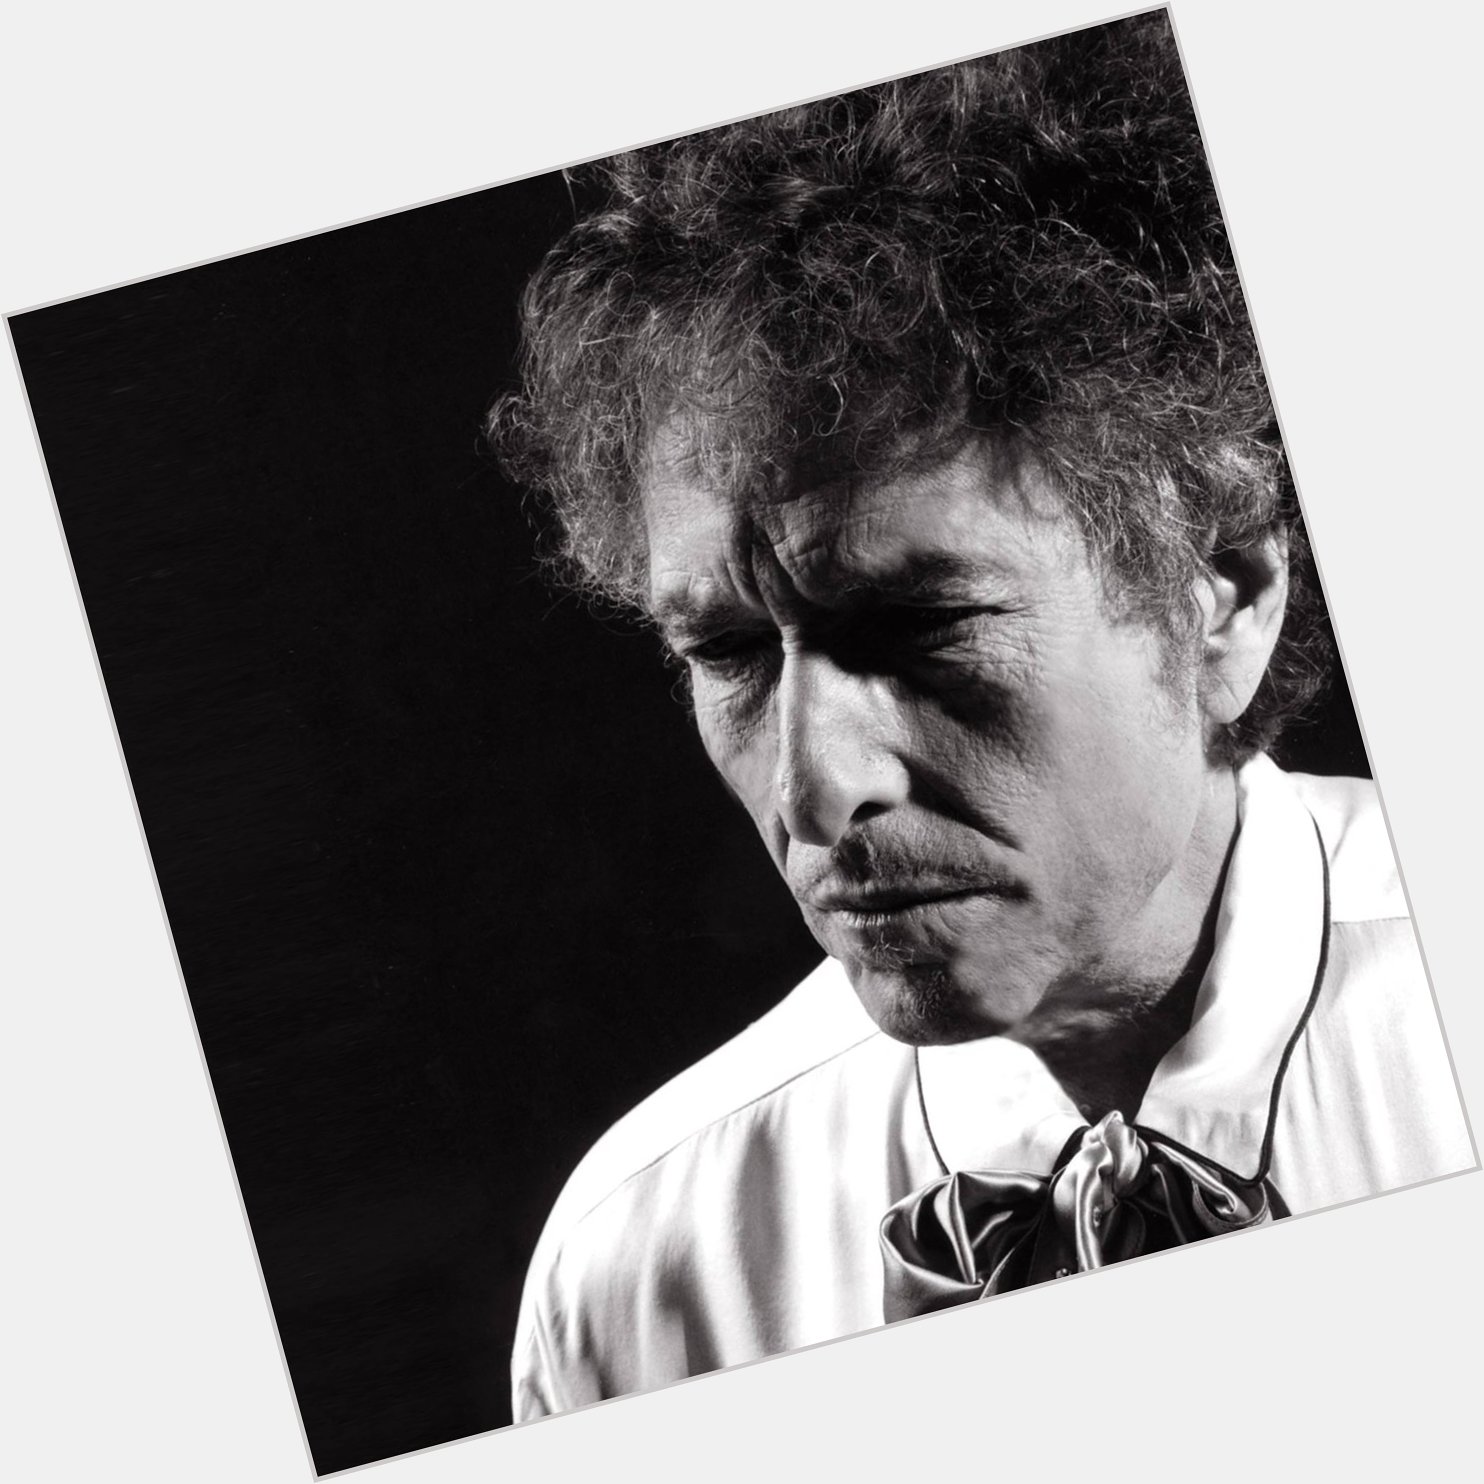 Happy 76th birthday to Bob Dylan! 